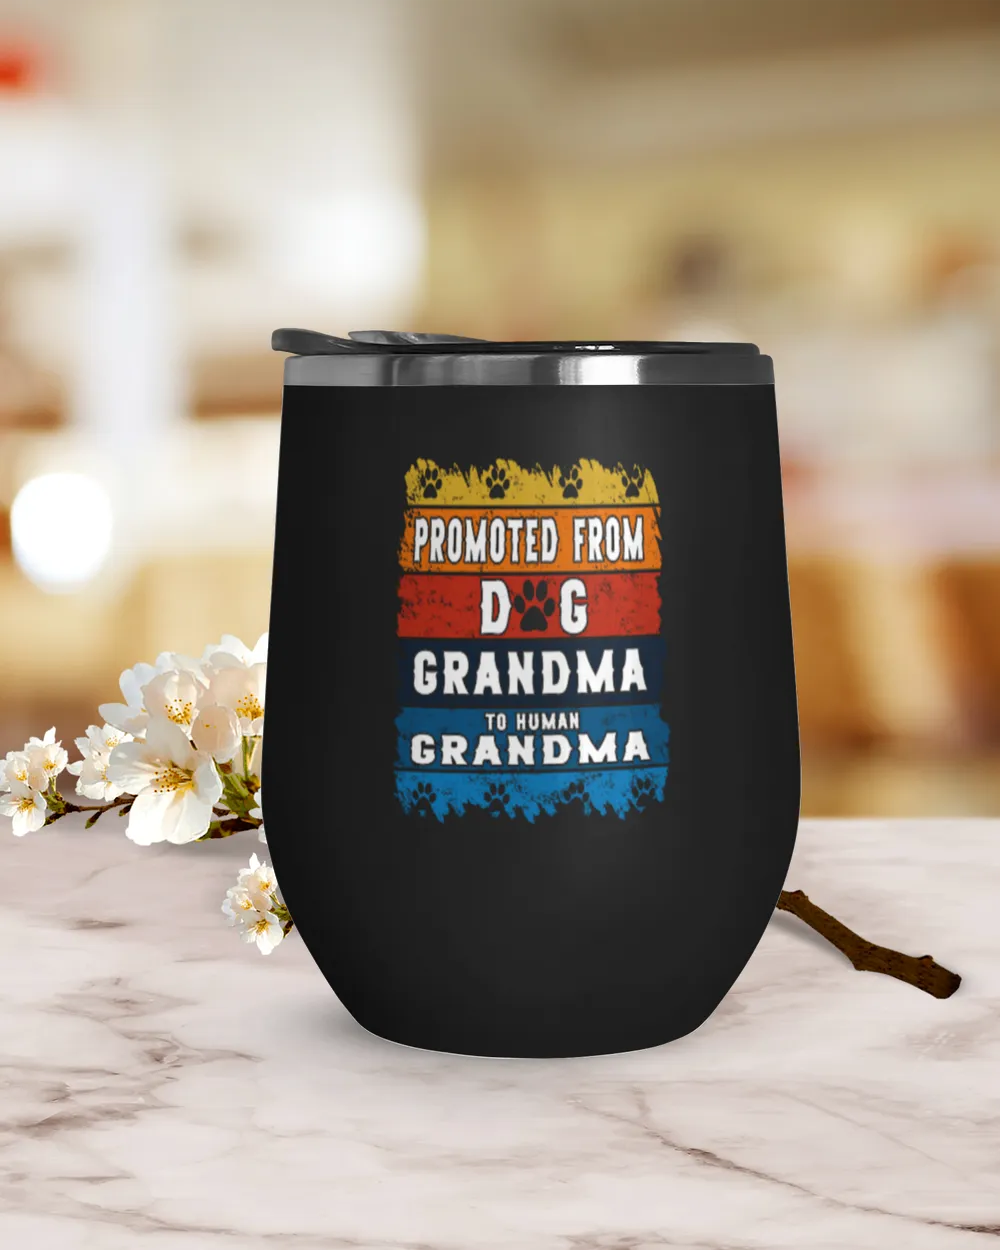 Promoted From Dog Grandma To Human Grandma Personalized Grandpa Grandma Mom Sister For Dog Lovers